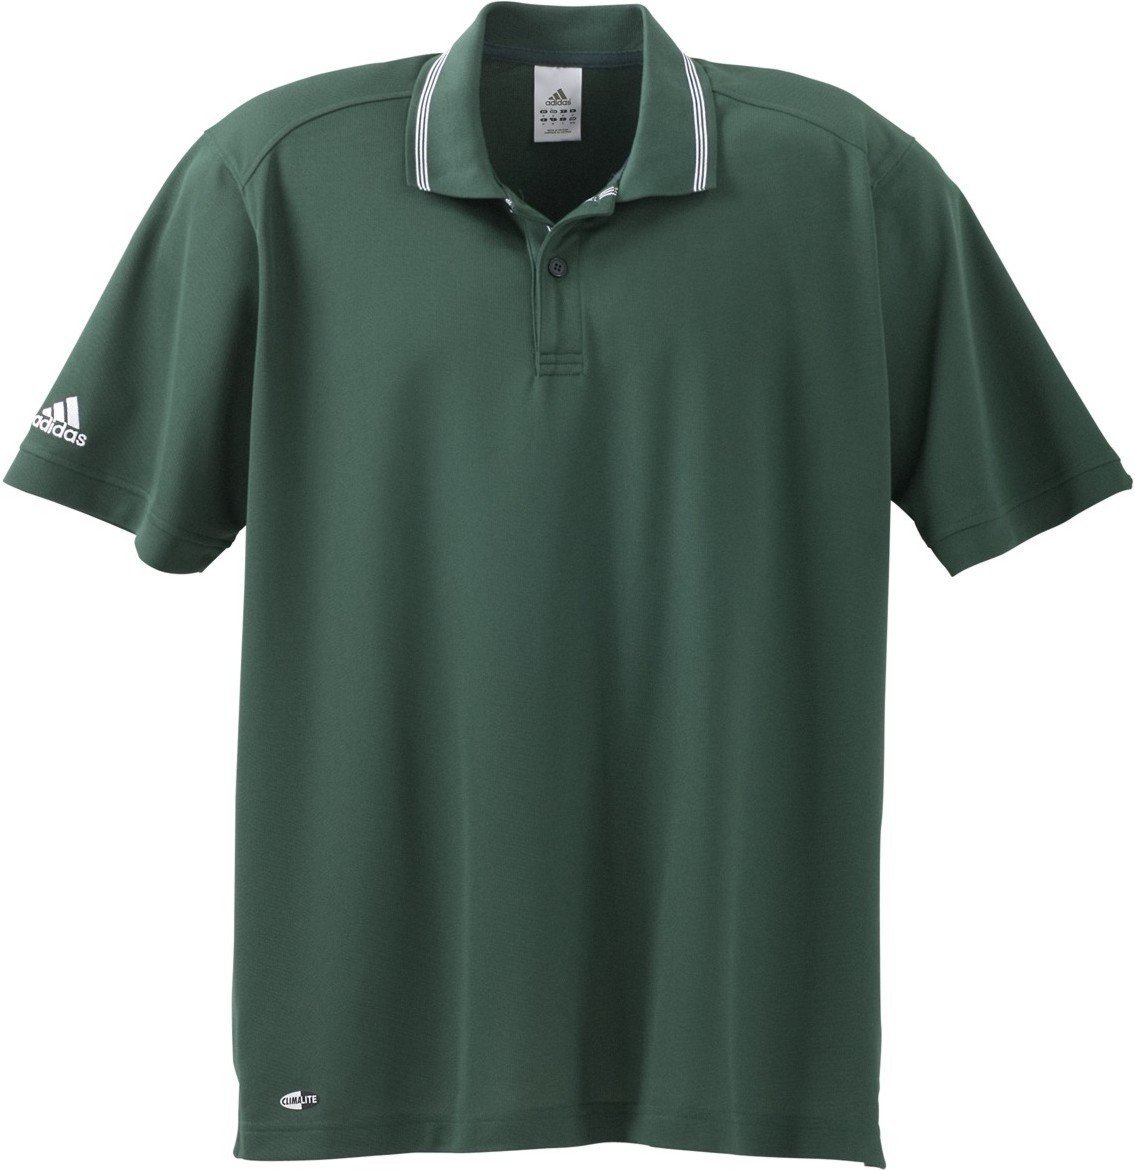 Mens Adidas A14 Climalite Tech Athletic Golf Polo Shirts